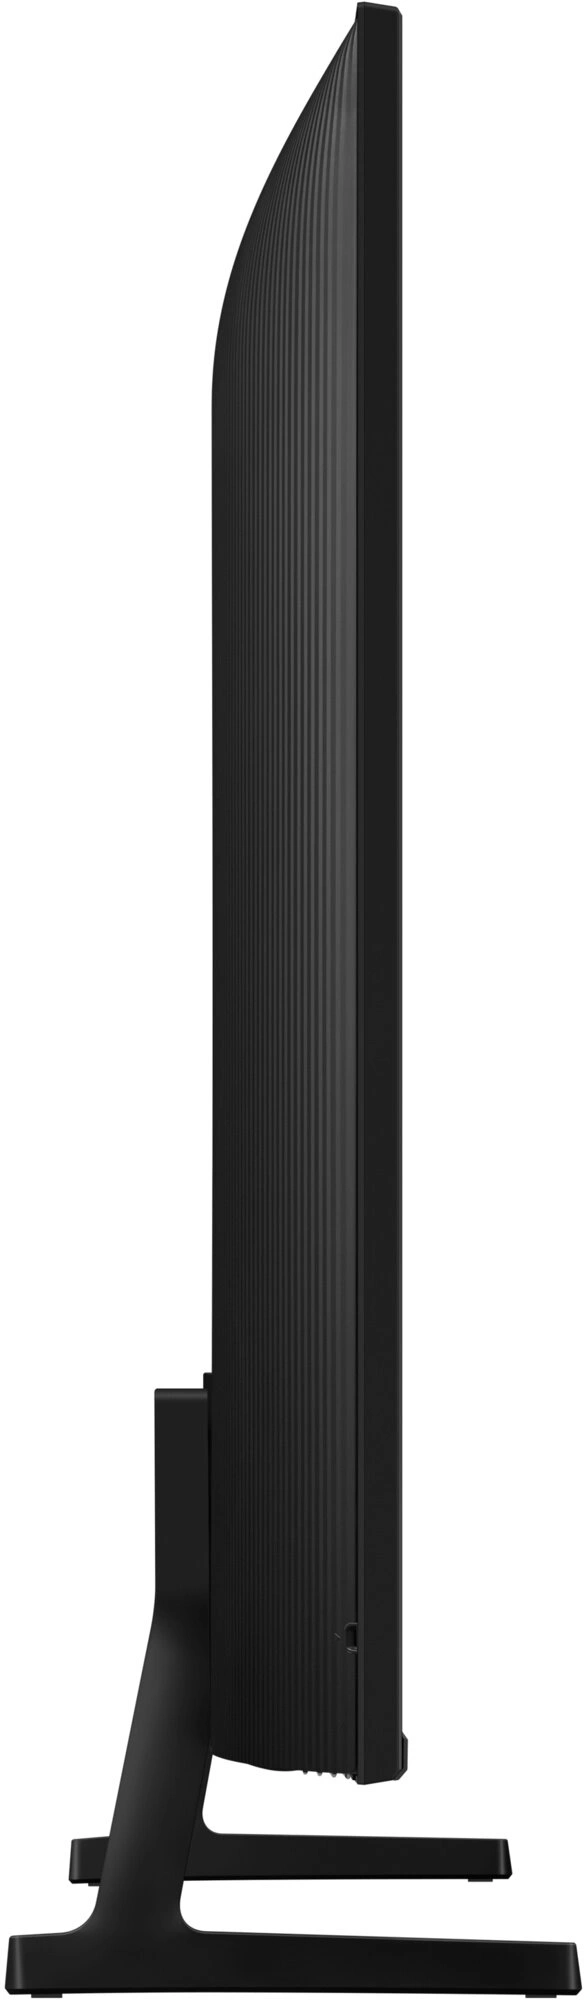 Samsung UE65DU7172 - 163cm